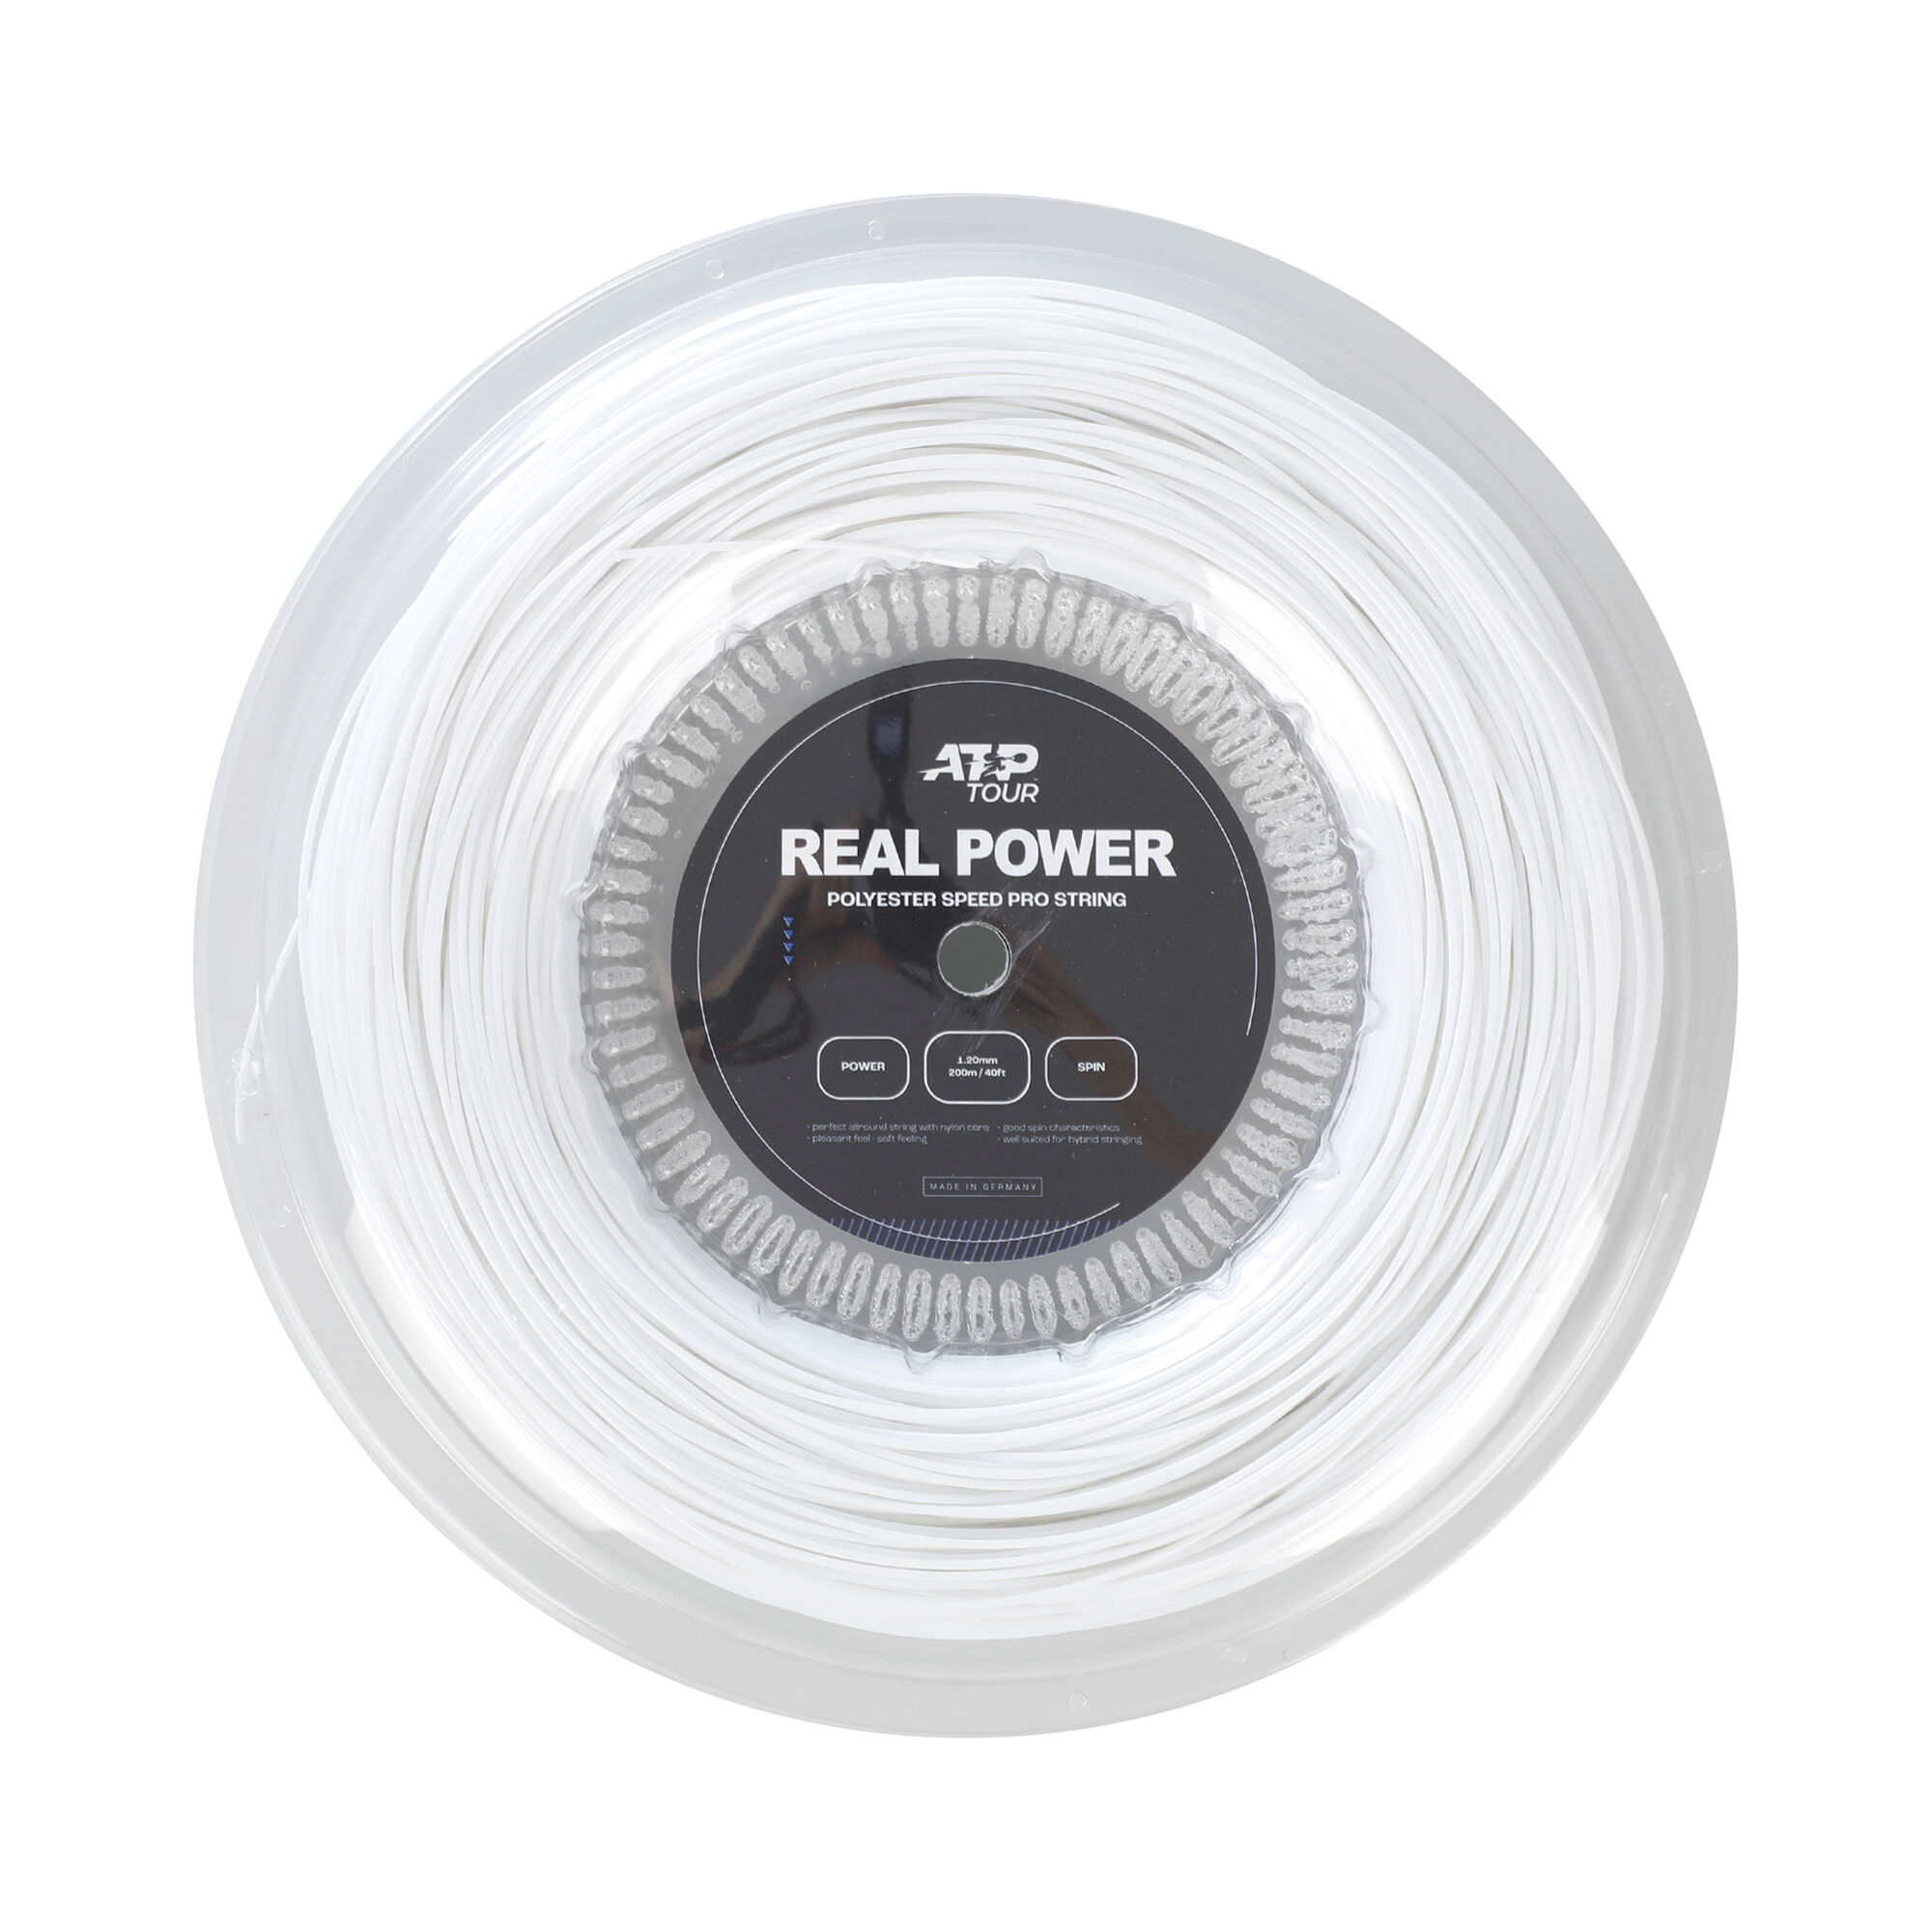 Real Power String Reel 200m - White